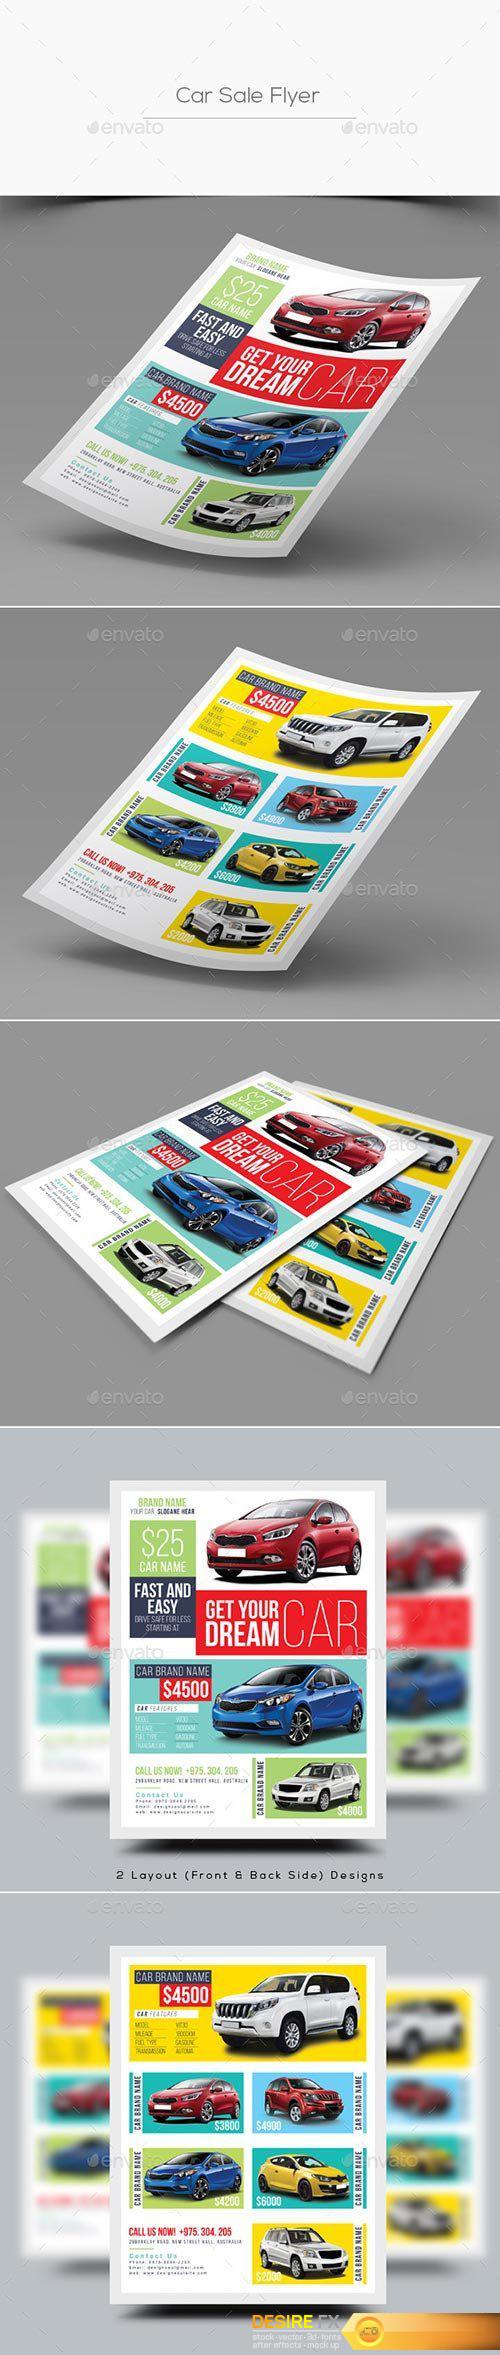 Graphicriver - Car Sale Flyer 20650112